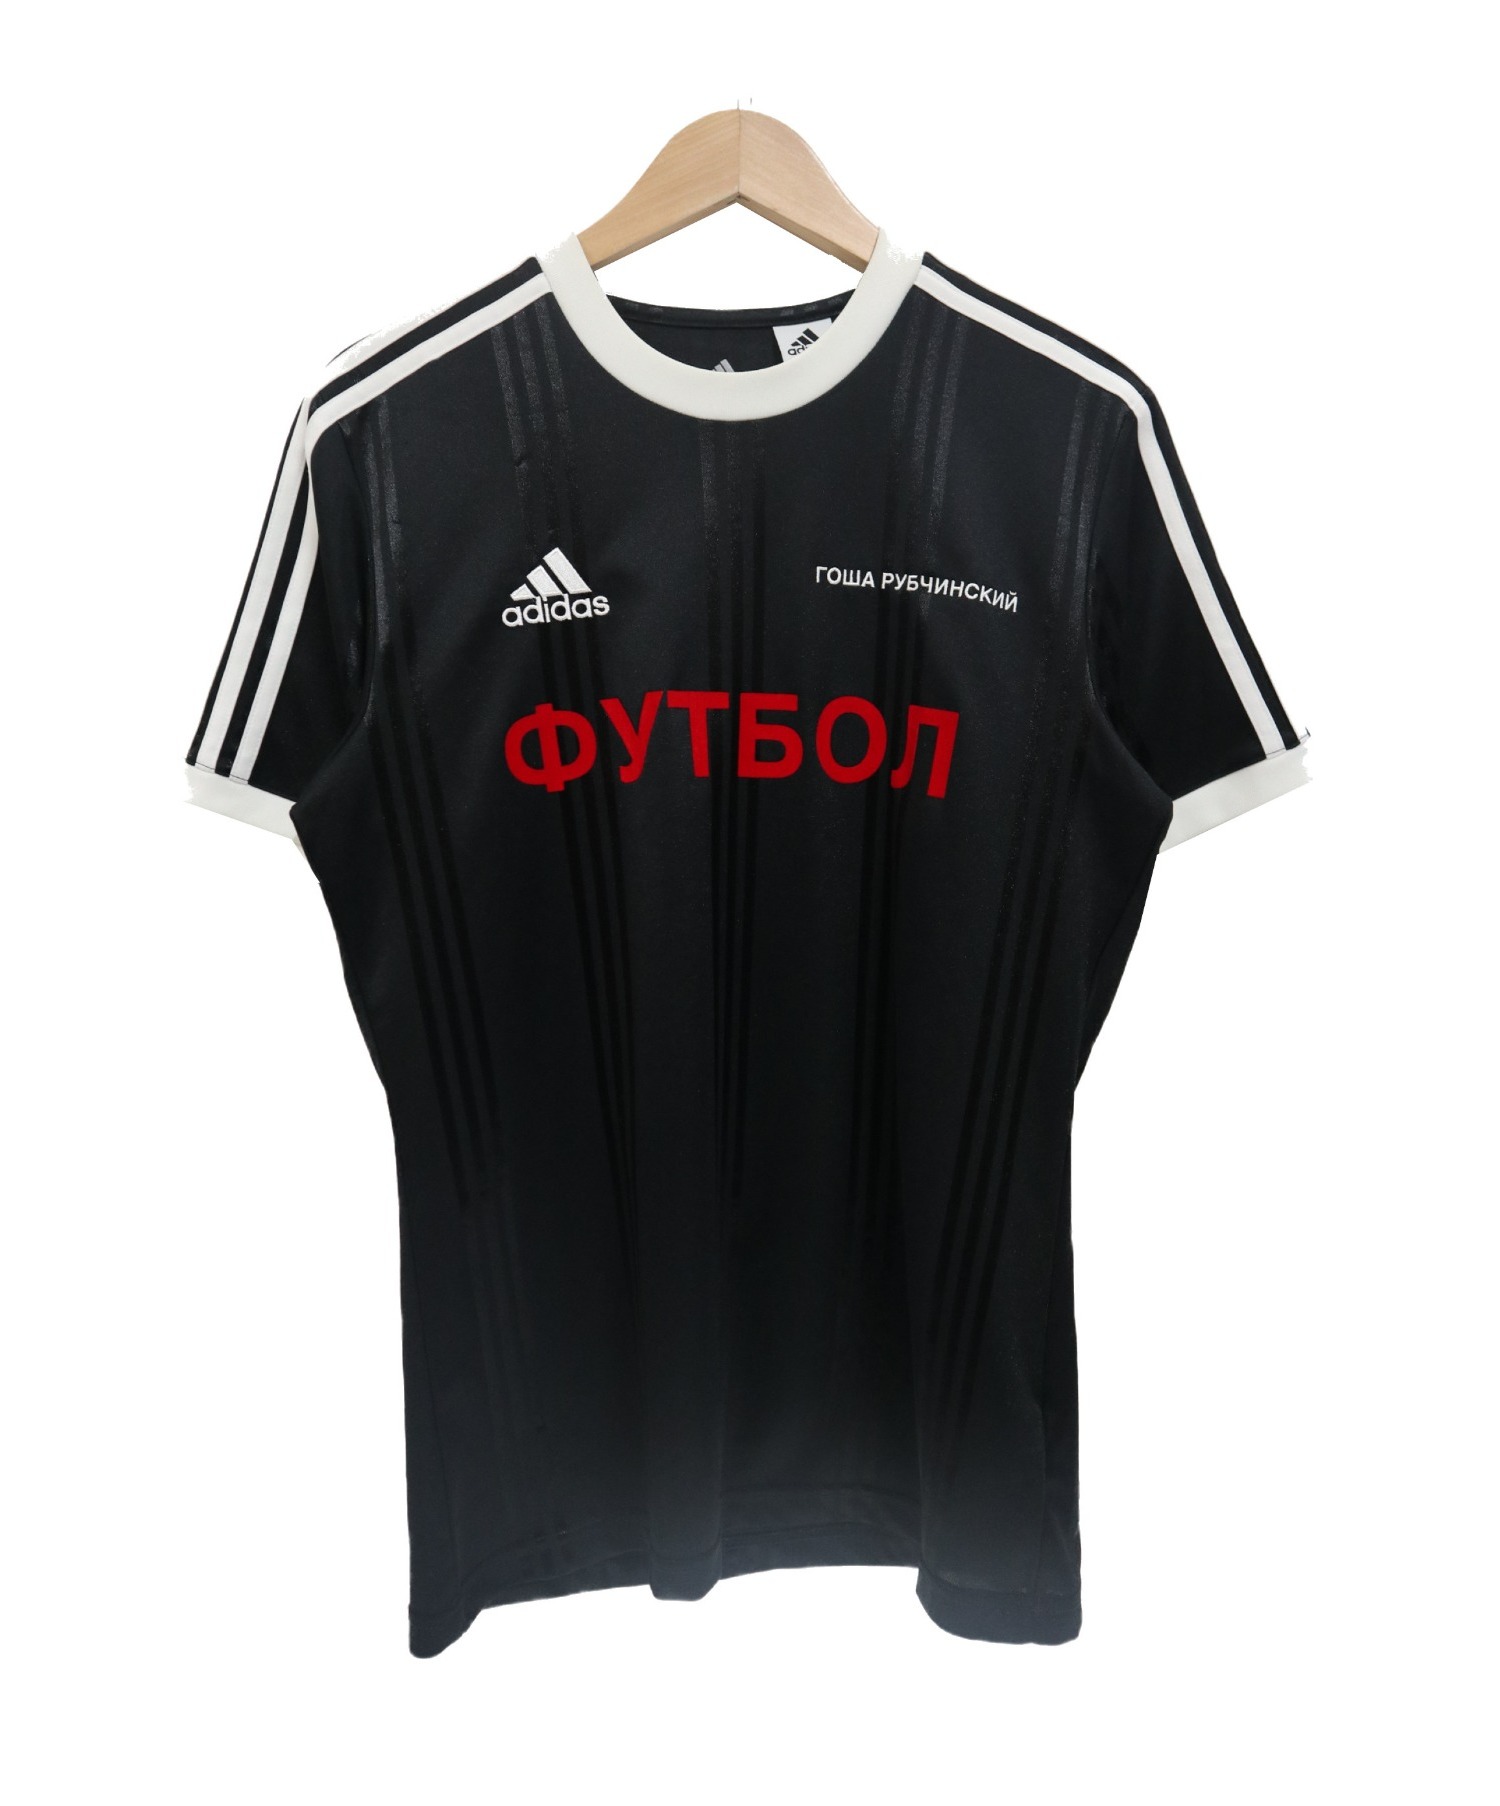 Gosha Rubchinskiy×adidas (ゴーシャ・ラブチンスキー×アディダス) コラボゲームシャツ ブラック サイズ:S